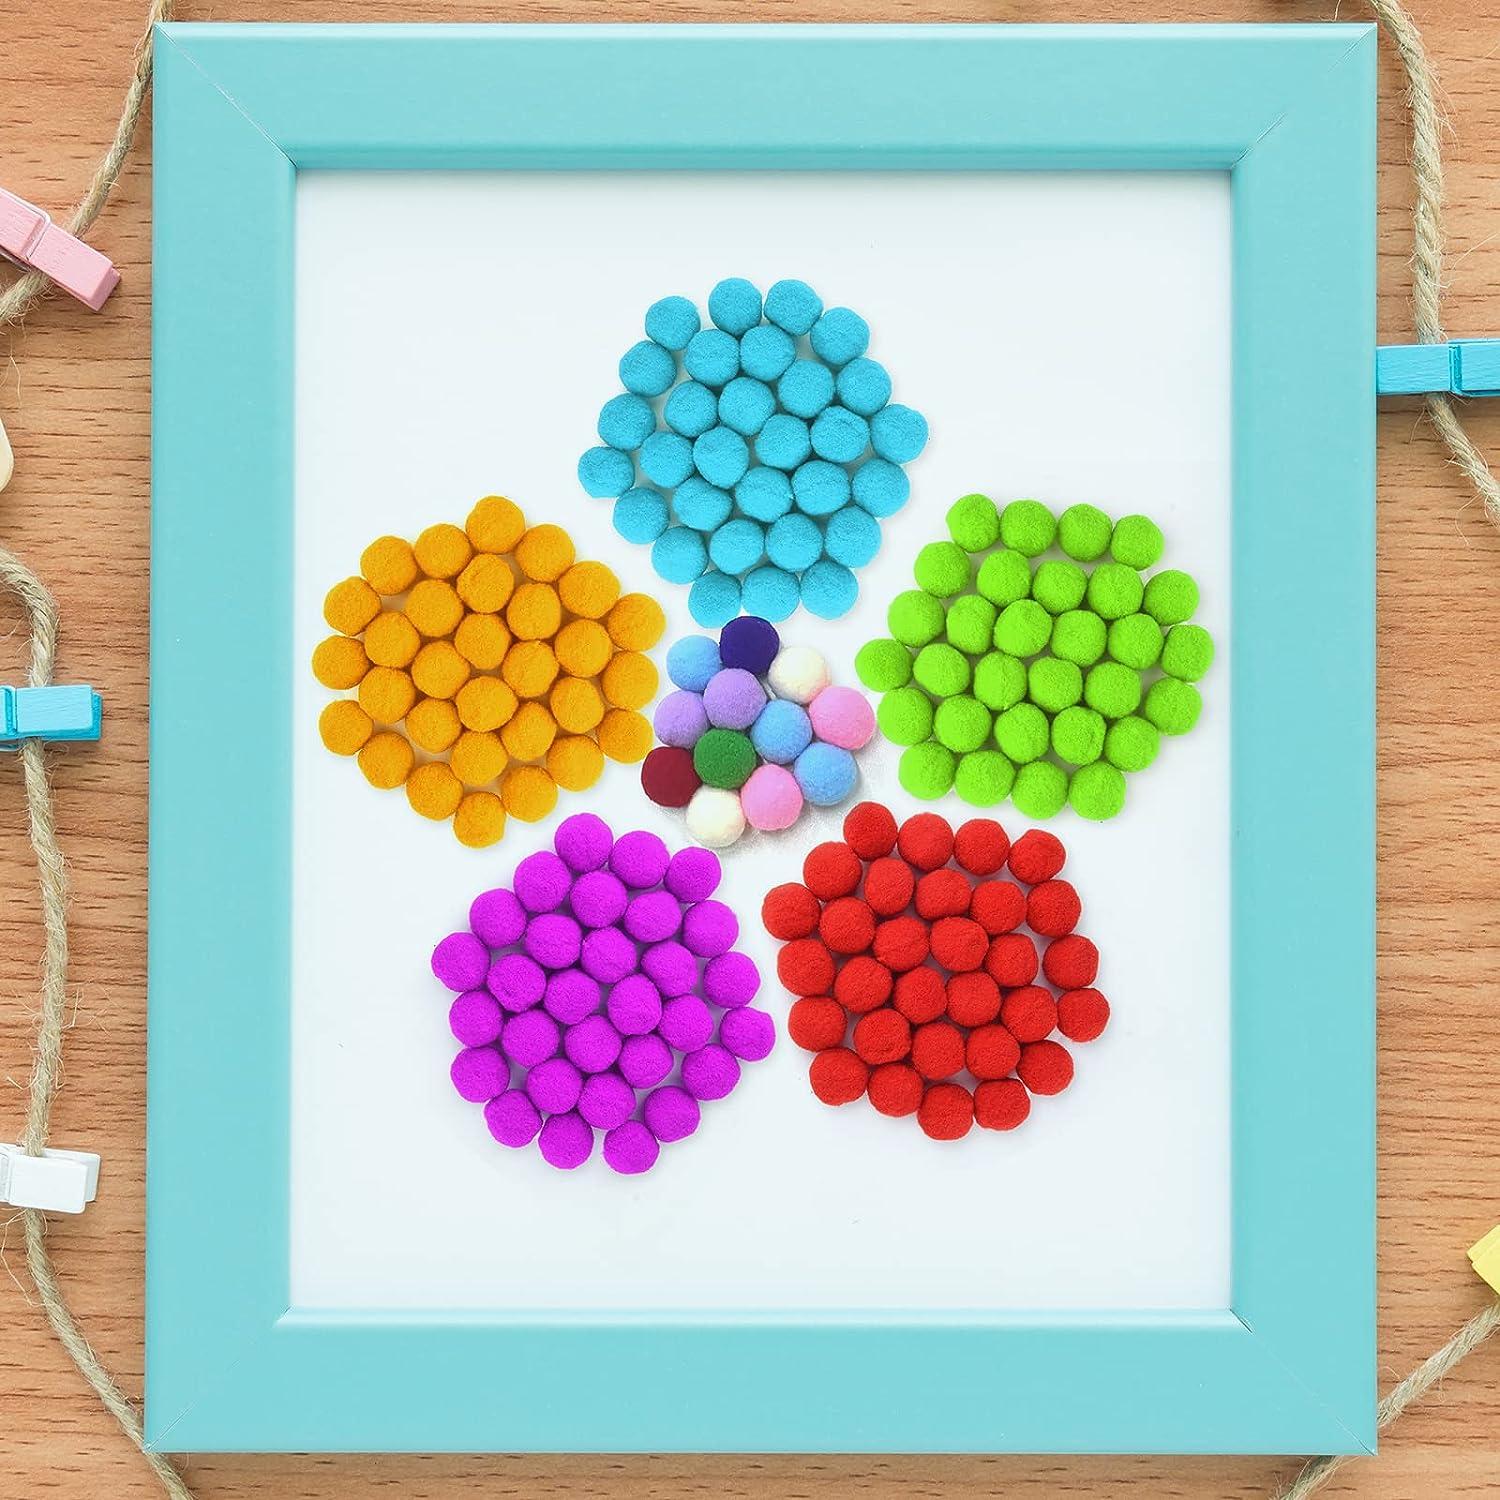 TUPARKA 100 Pcs Pom Poms Yellow Craft Pompoms Balls 1 Inch Pom Poms for  Kids Art Crafts DIY Projects